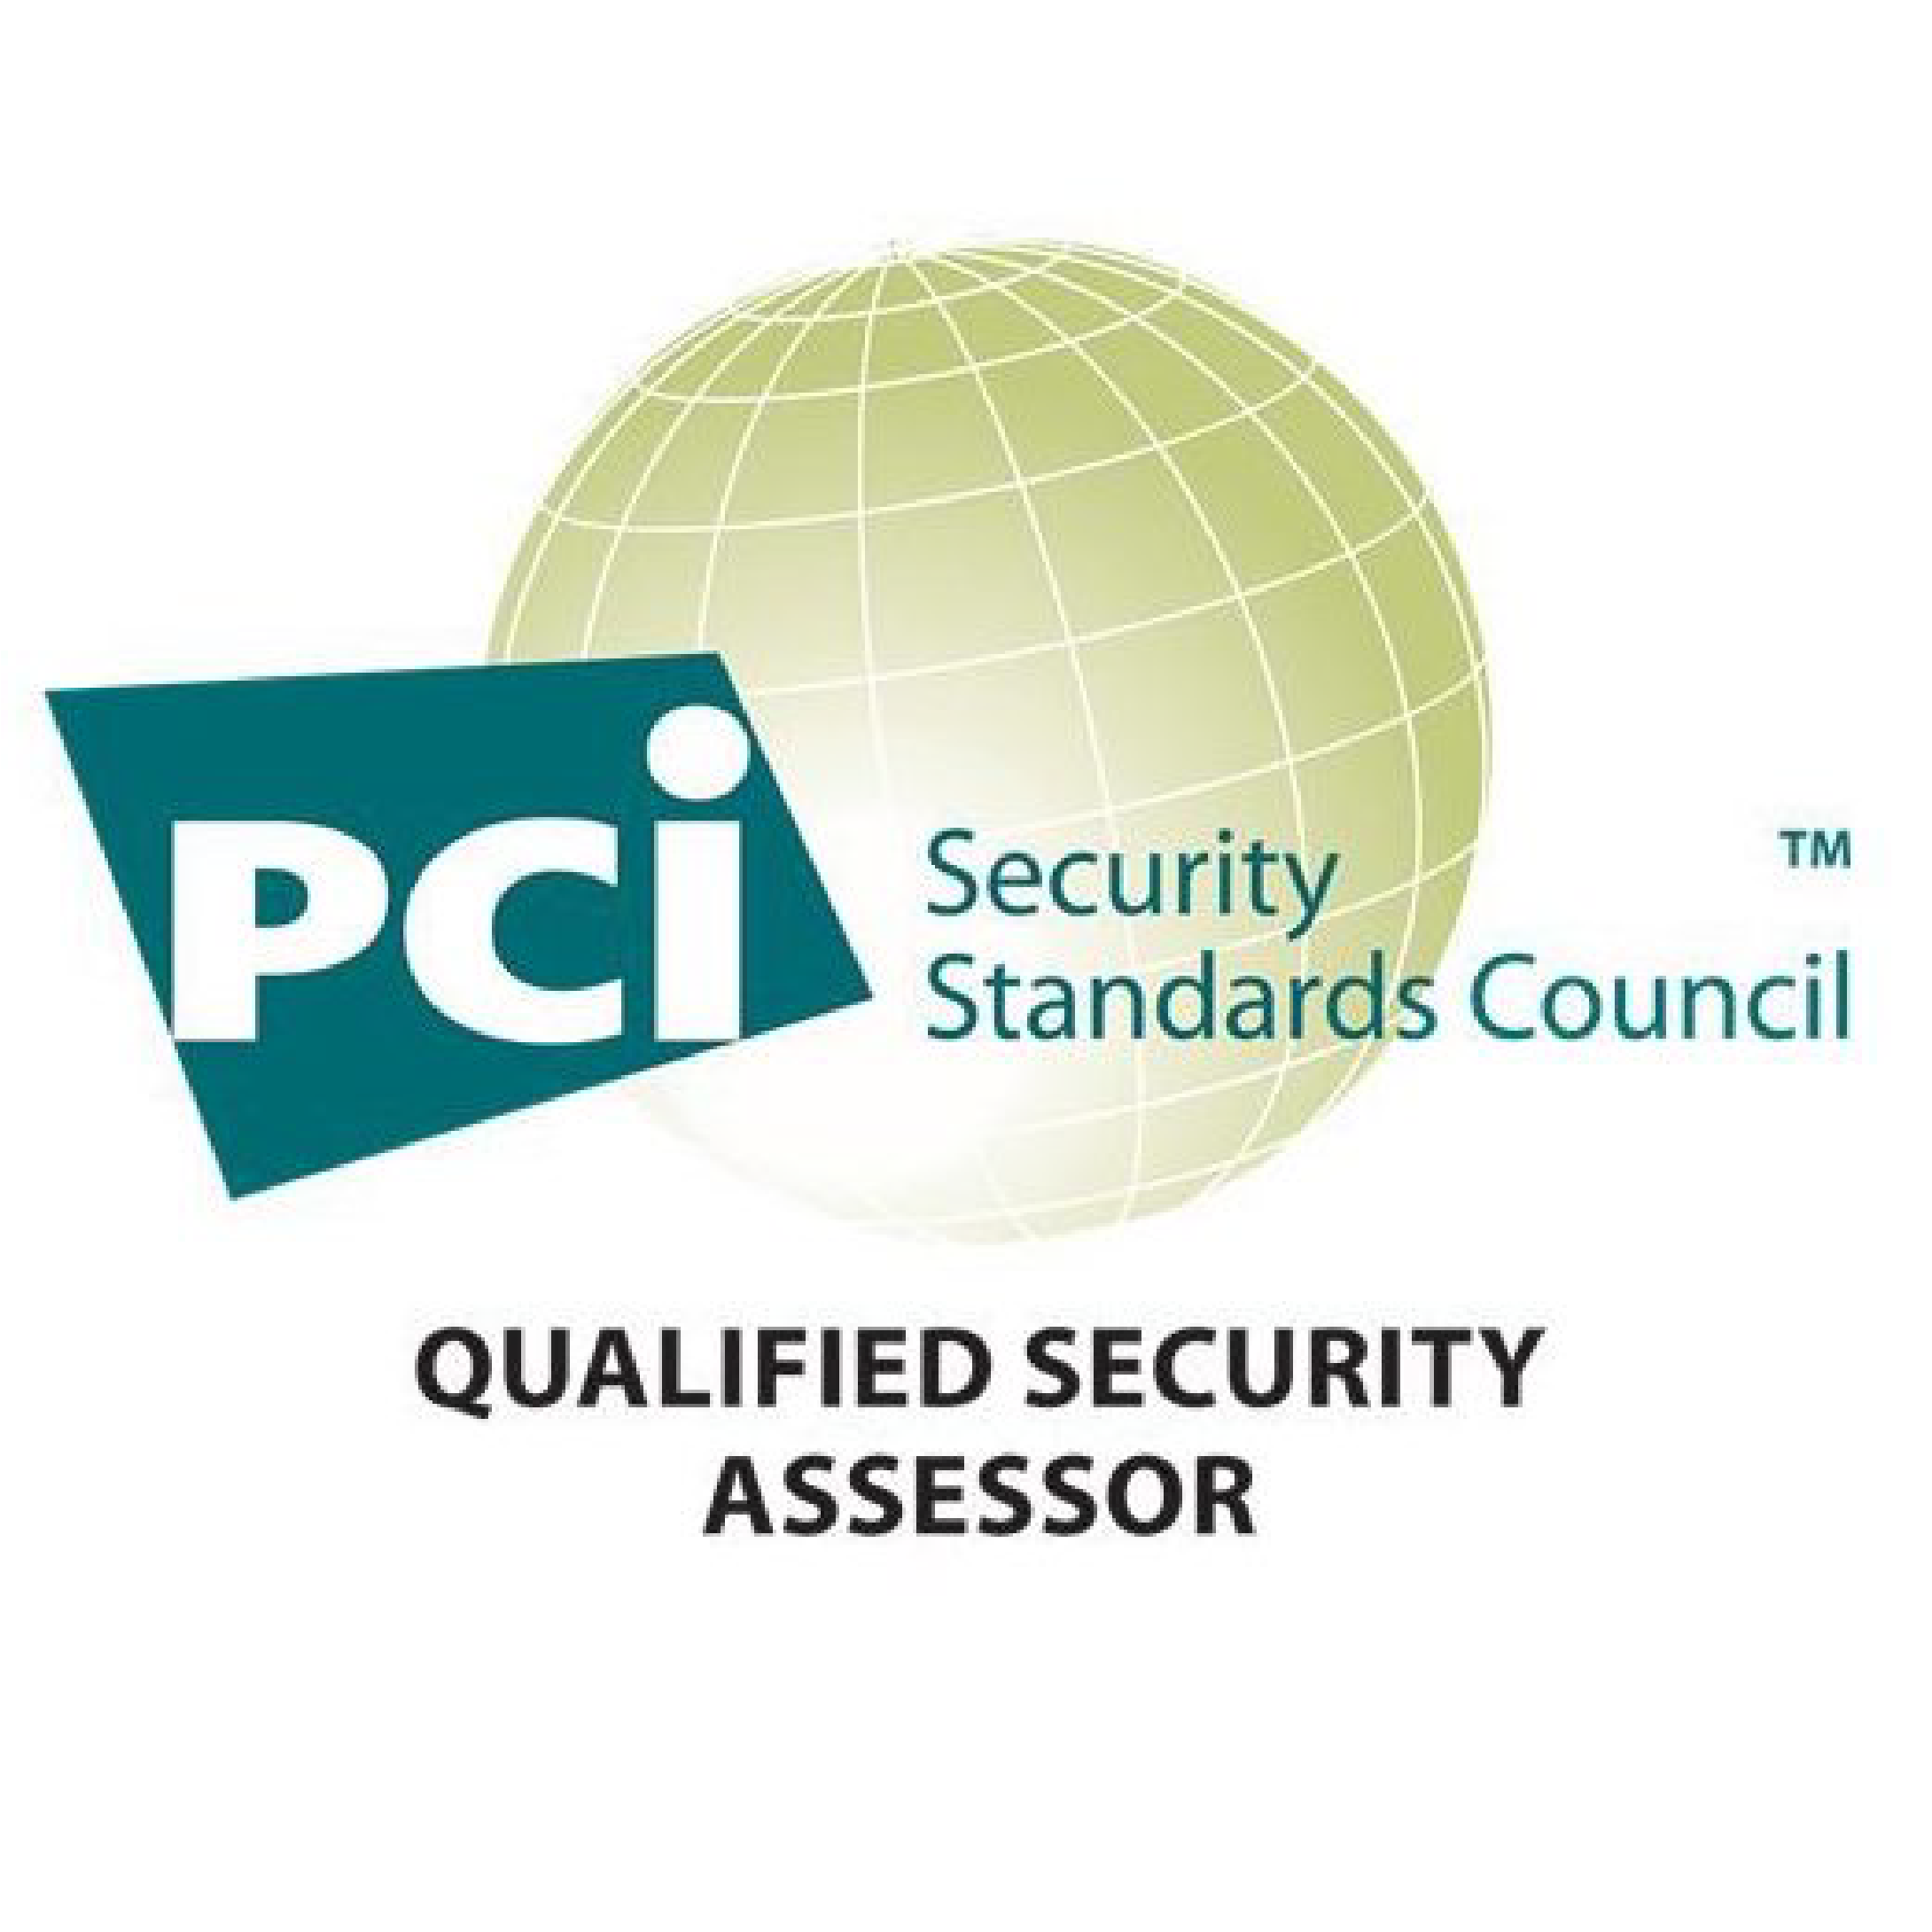 PCI security standard council